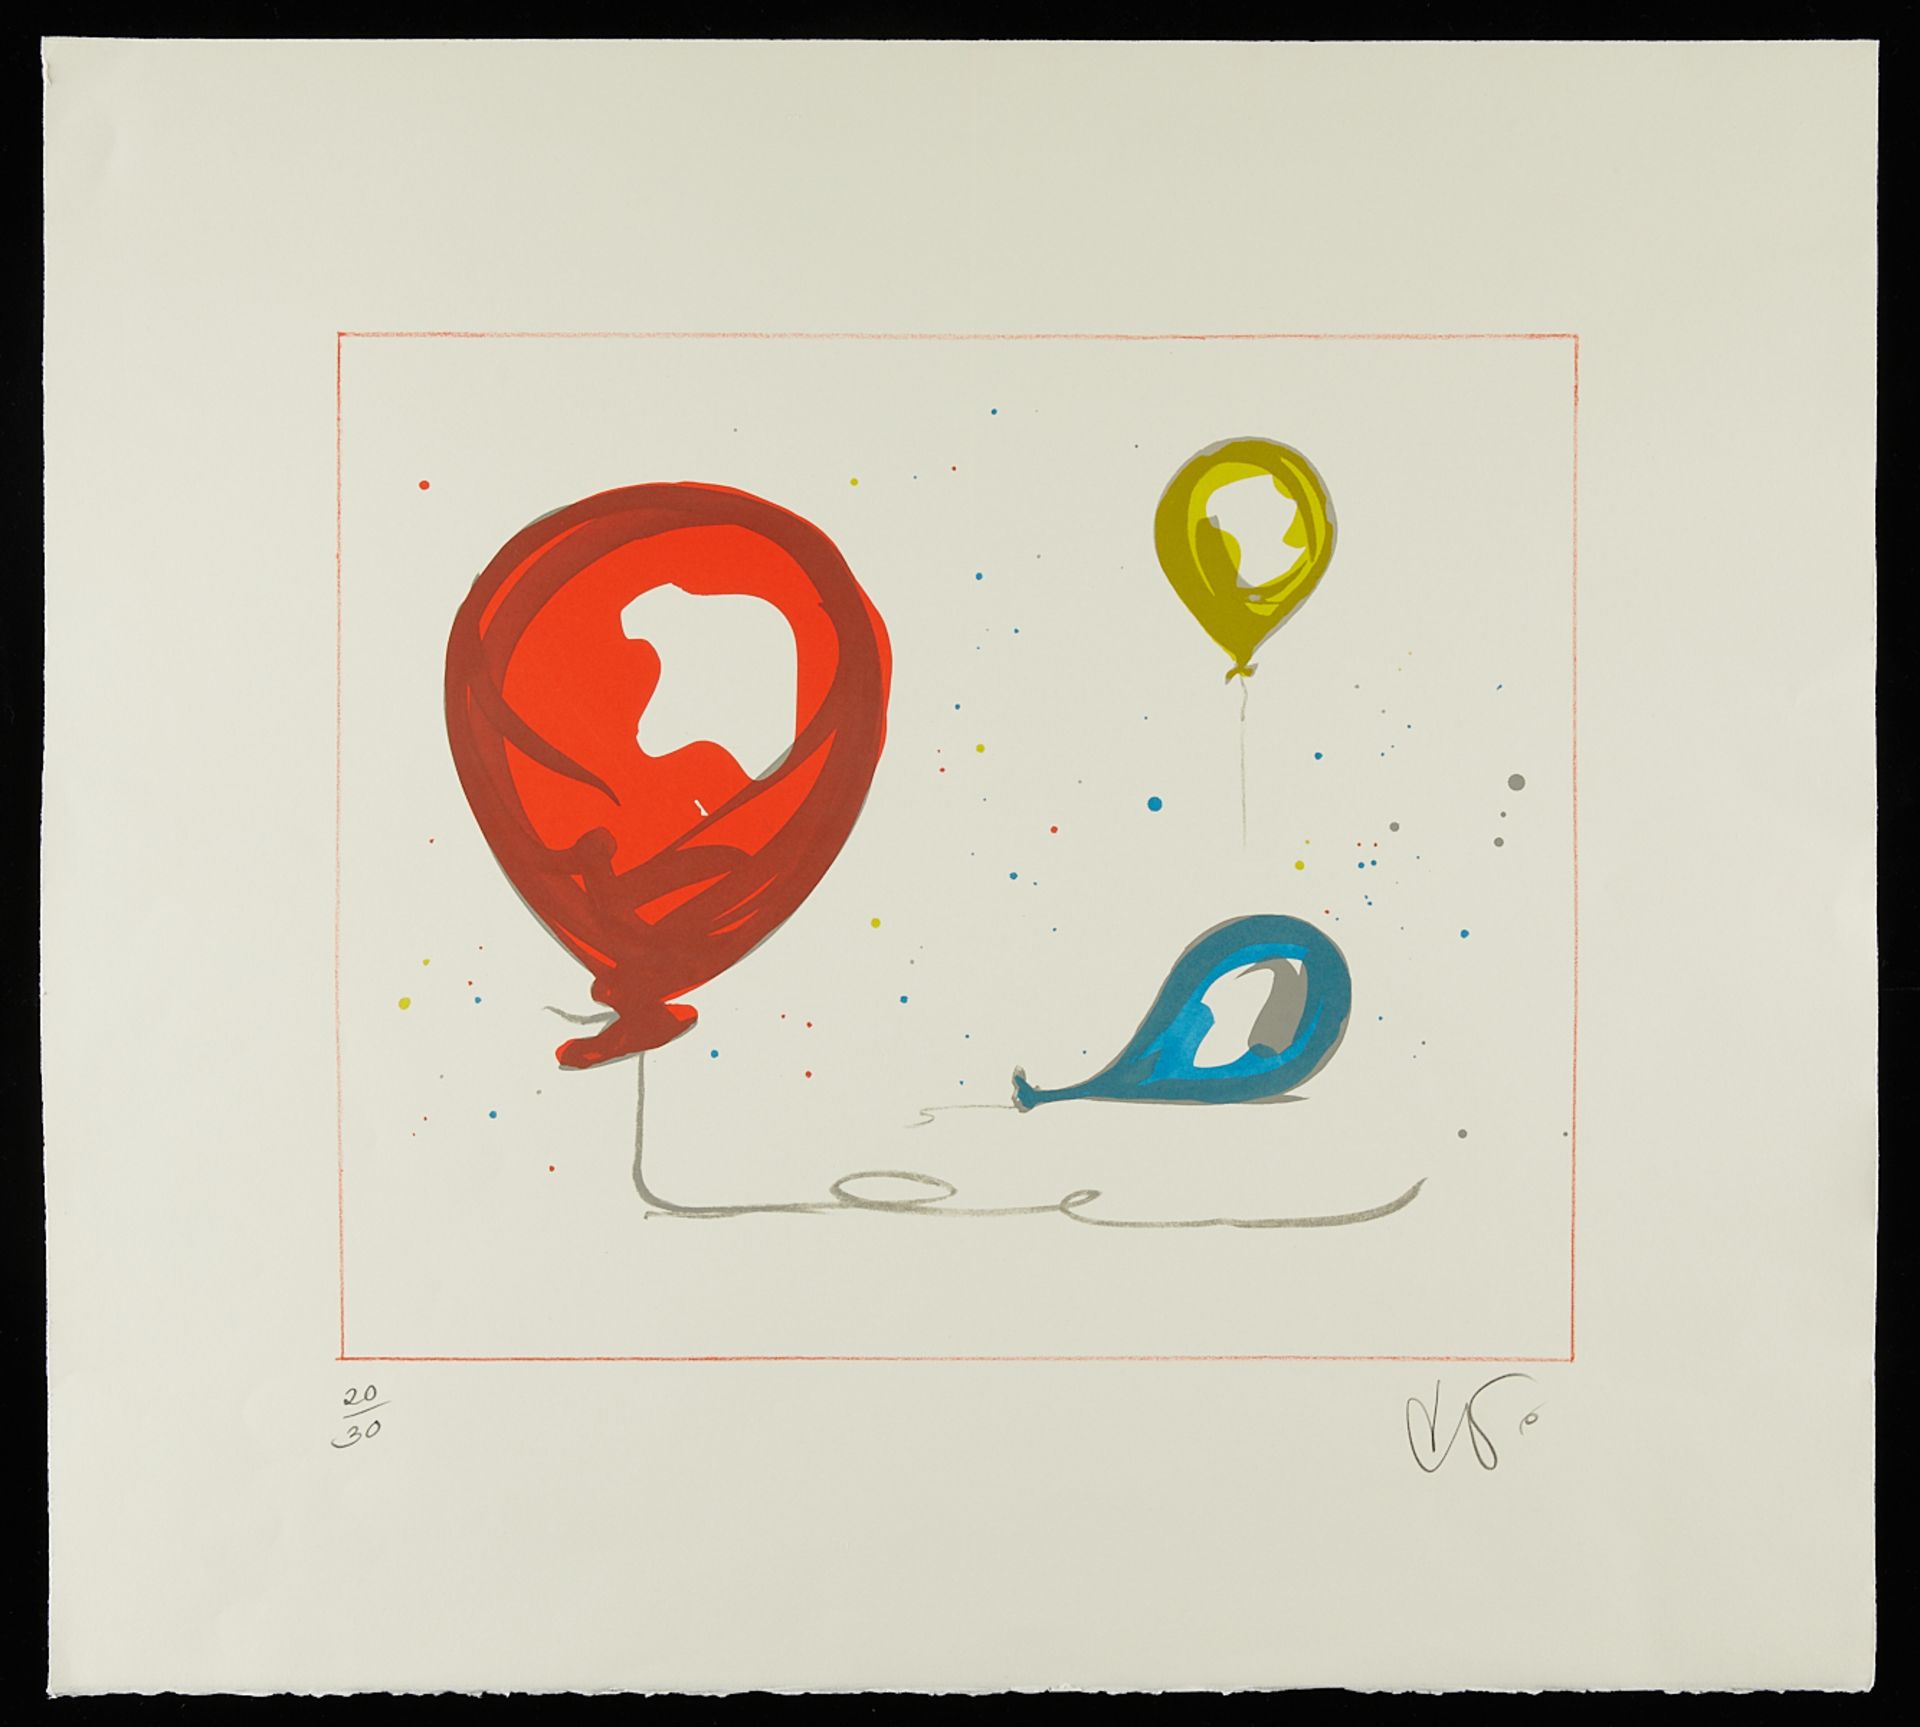 Claes Oldenburg "Balloons" Landfall Press Print - Image 3 of 8